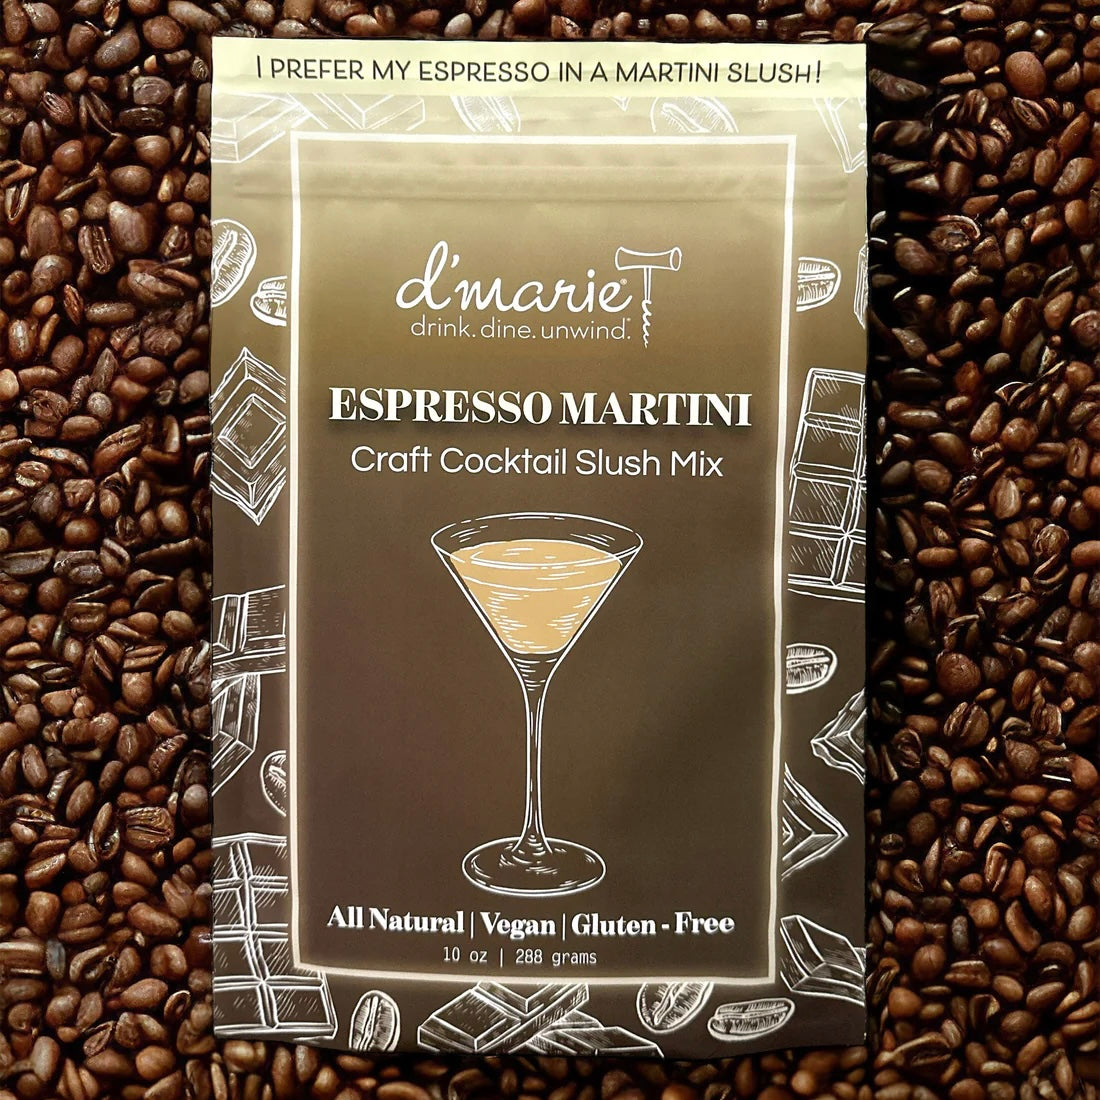 Craft Cocktail Slush Mix - Espresso Martini